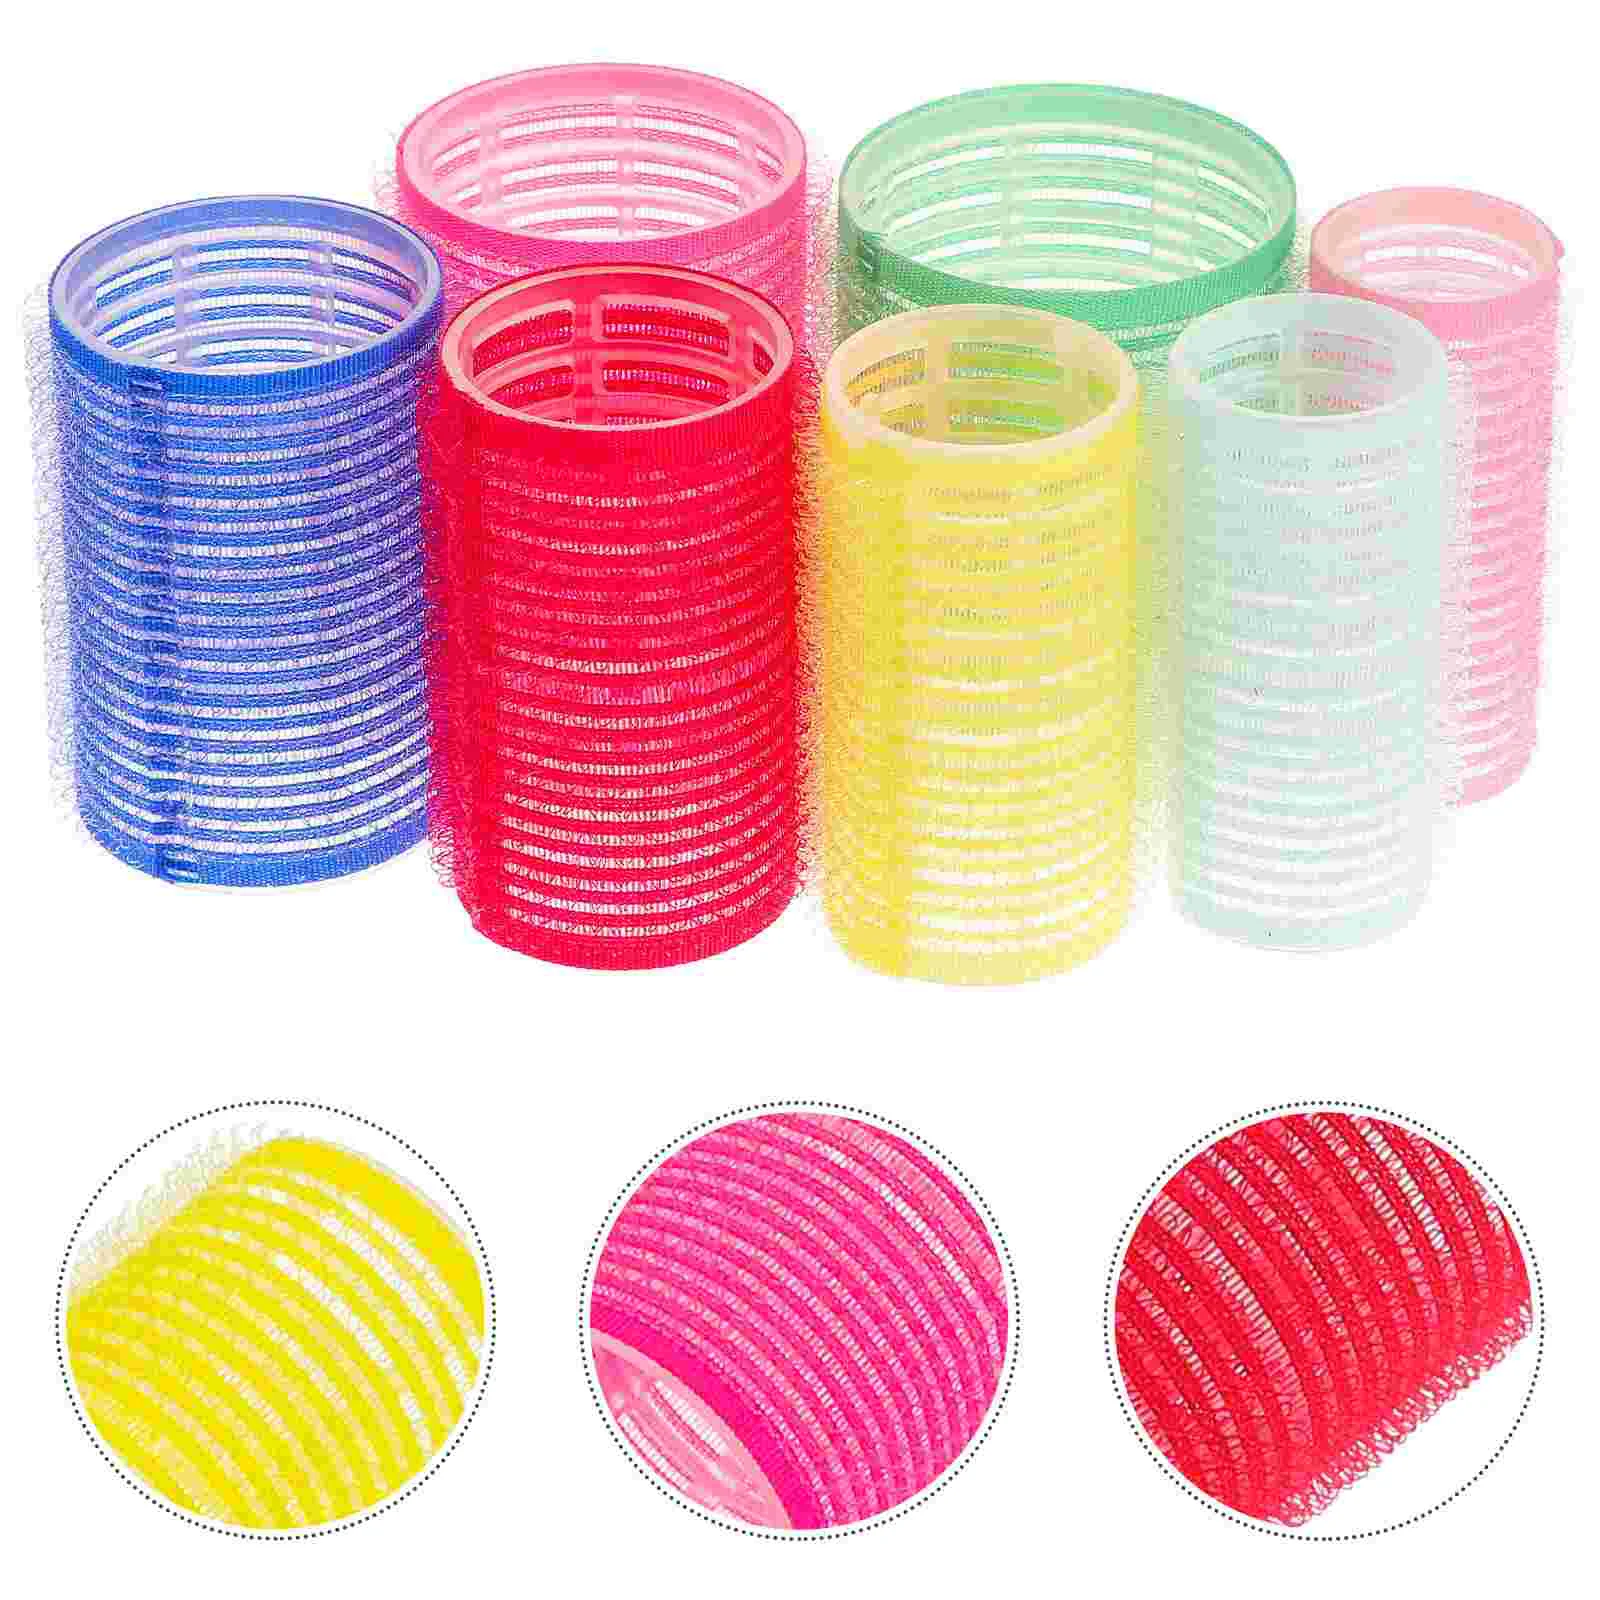 

Hair Rollers Self Curlers Grip Roller Curler Bangs Styling Bang Adhesive Curling Holding Hairdressing Tools Volume Plastic Set